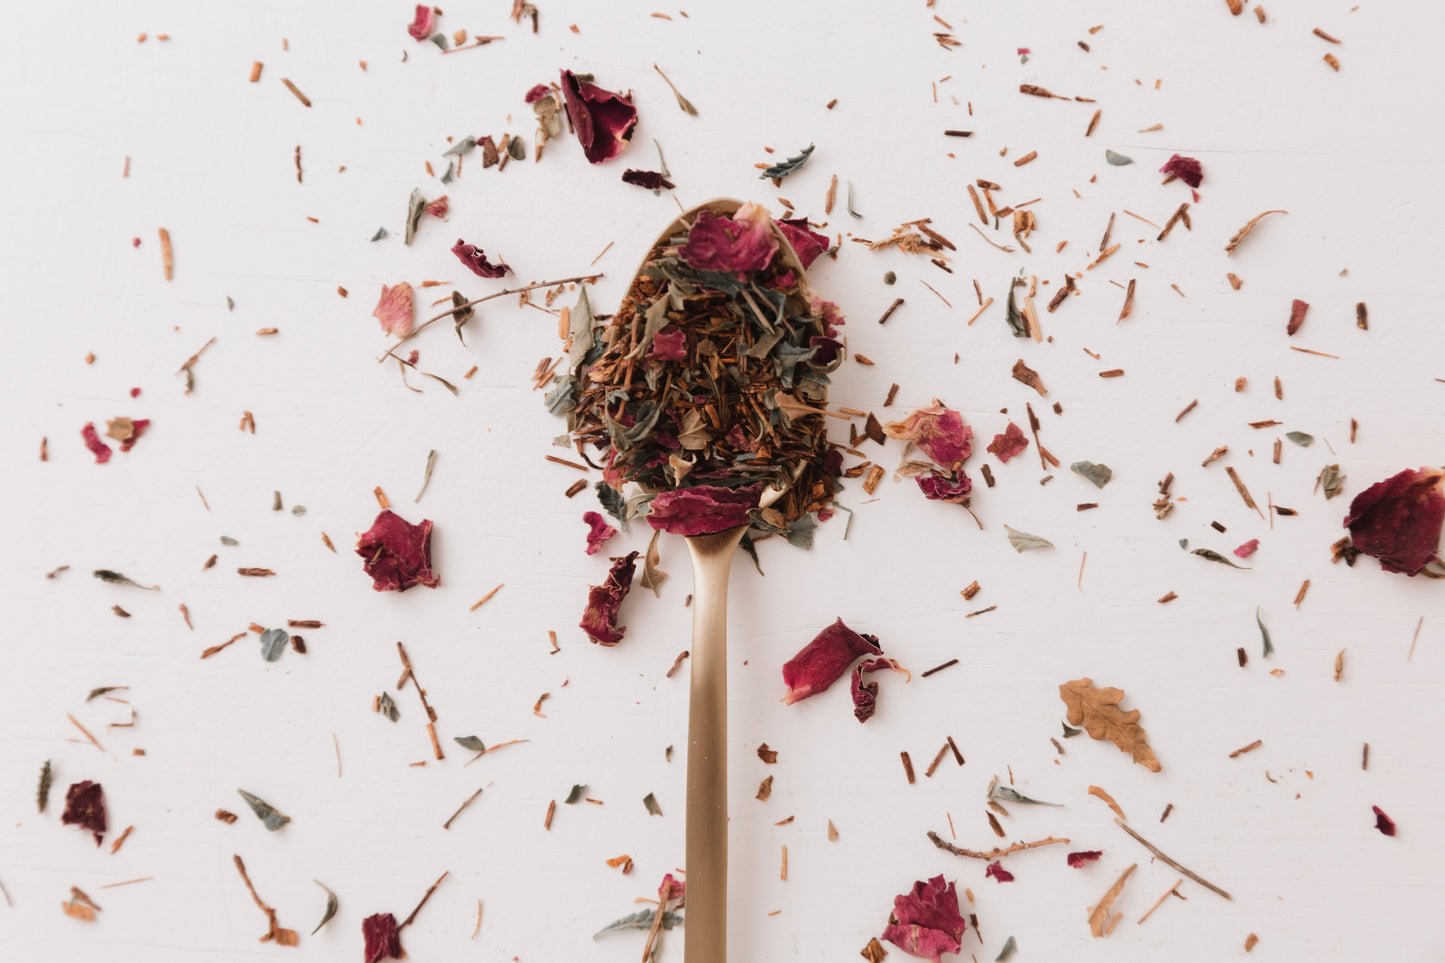 "Pocima de amor" herbal tea by Zänä Alquimia